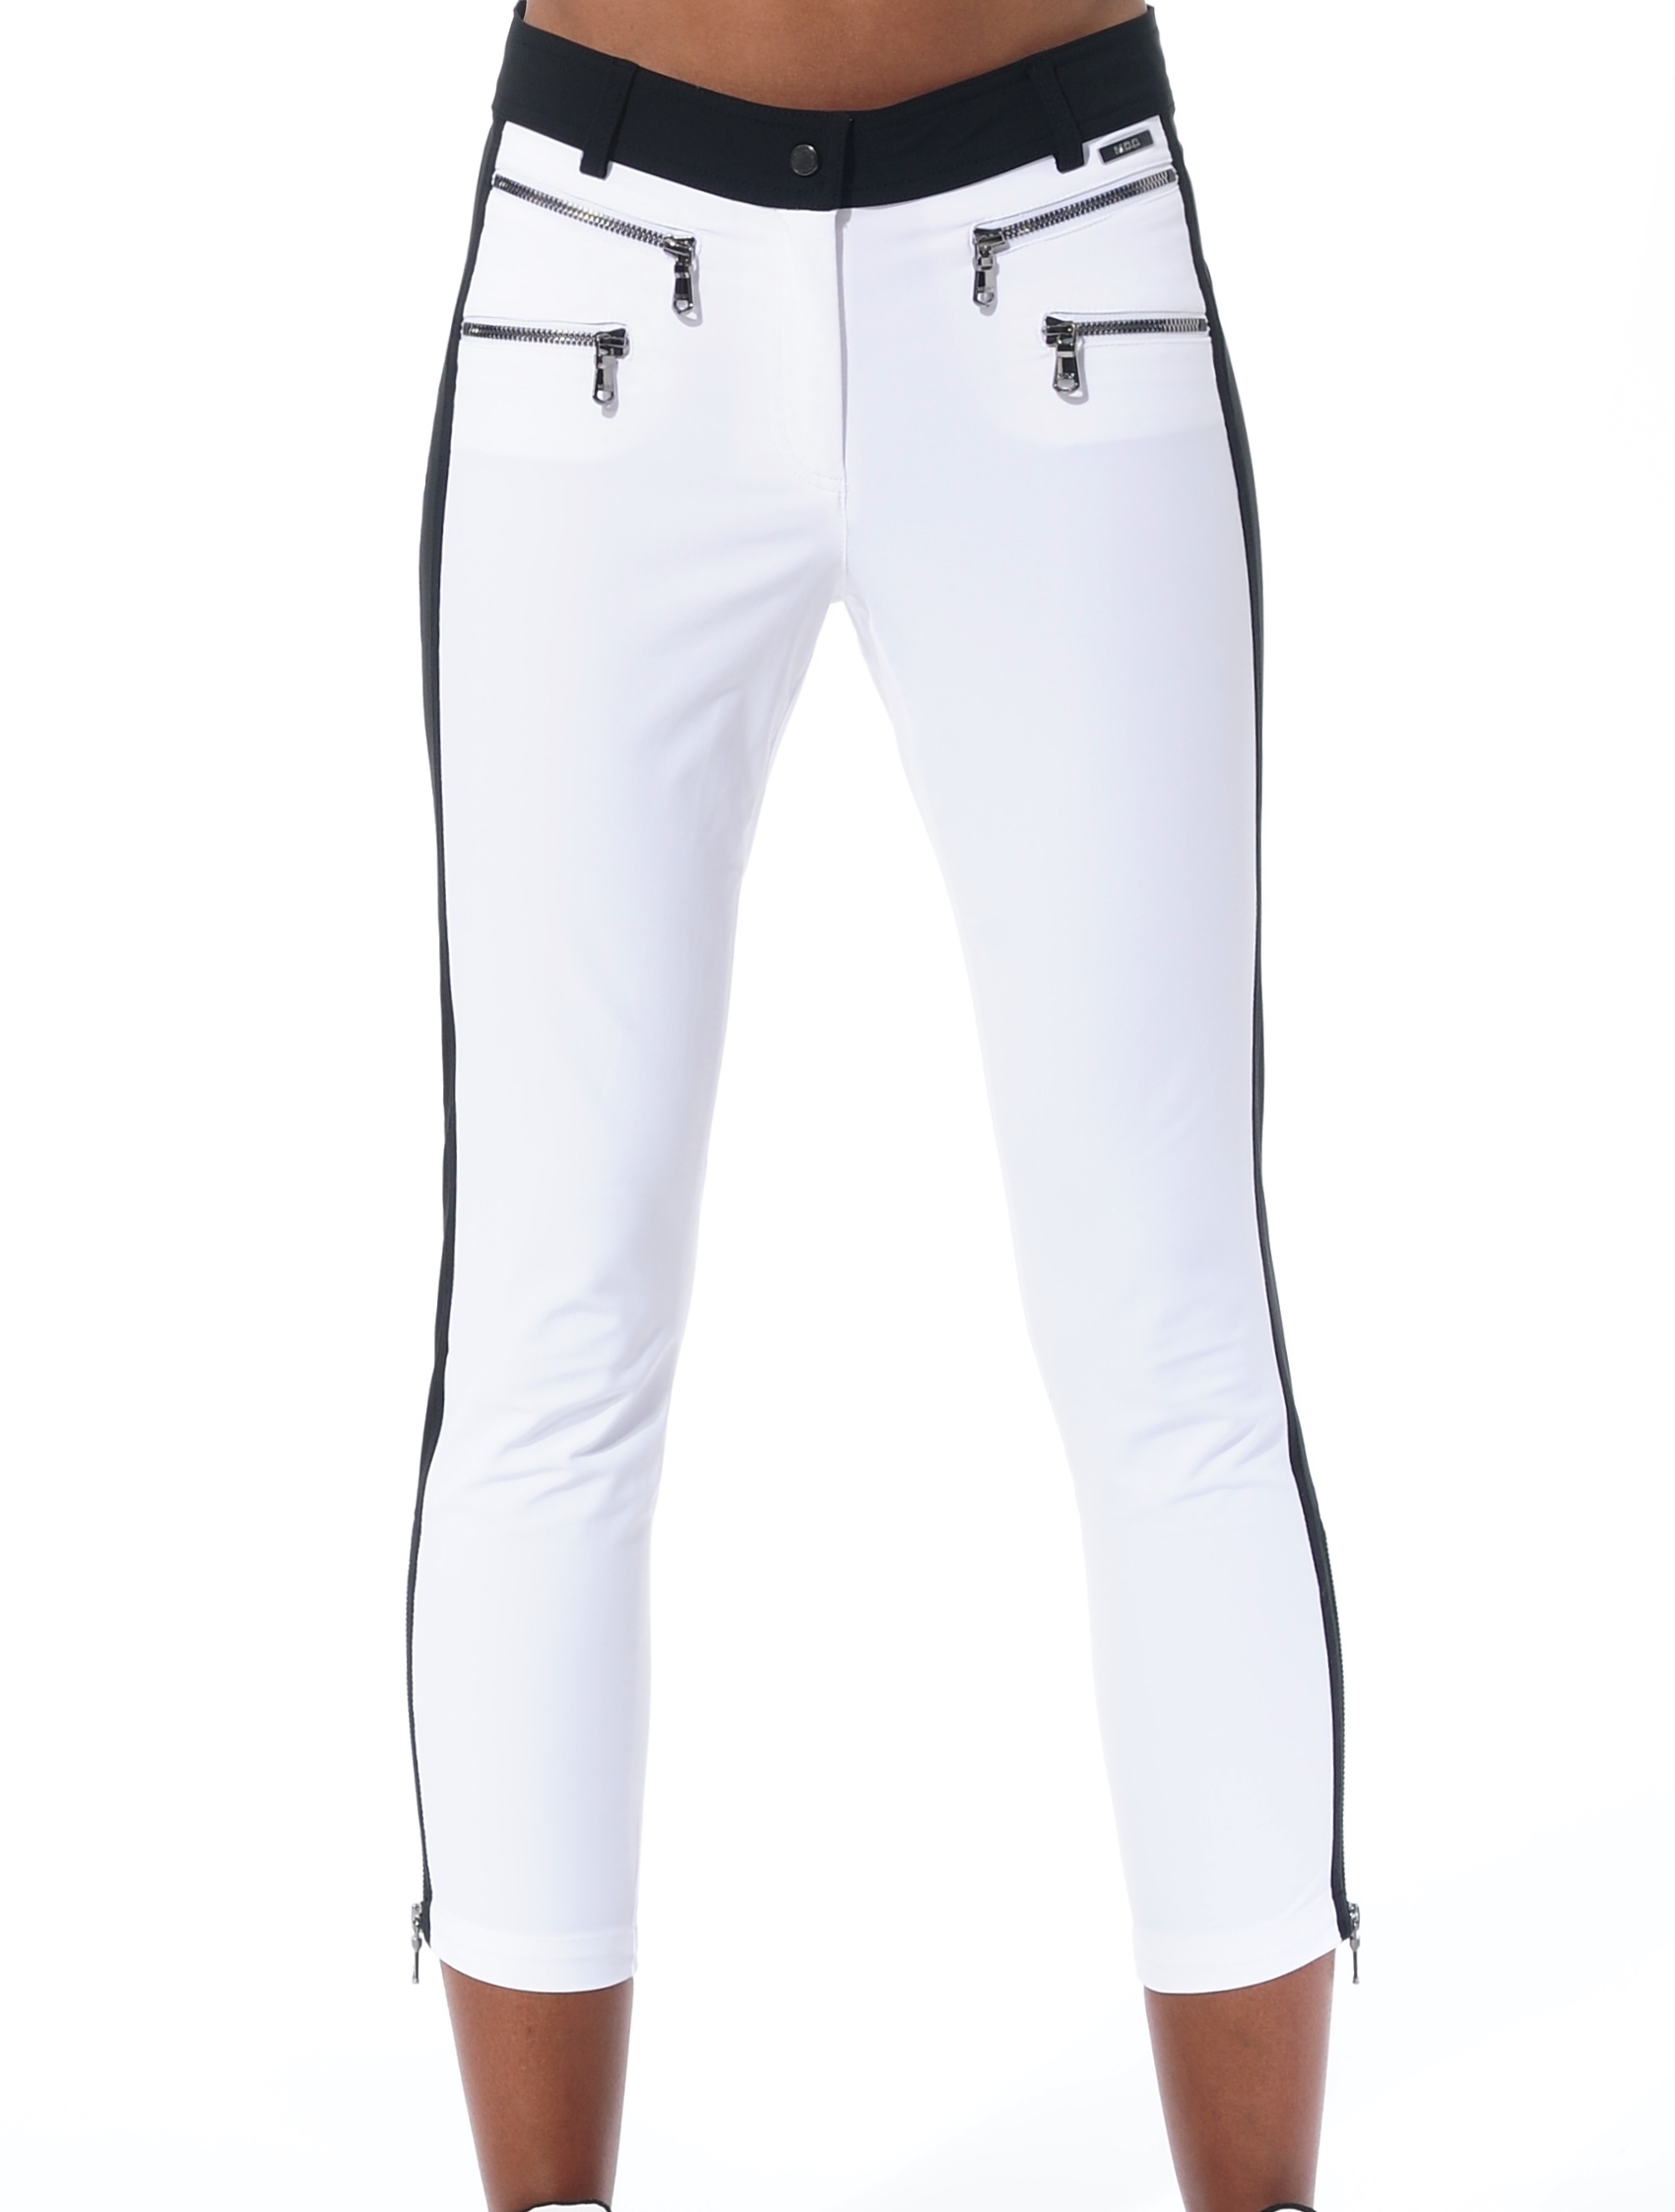 4way stretch double zip cropped pants white/black 